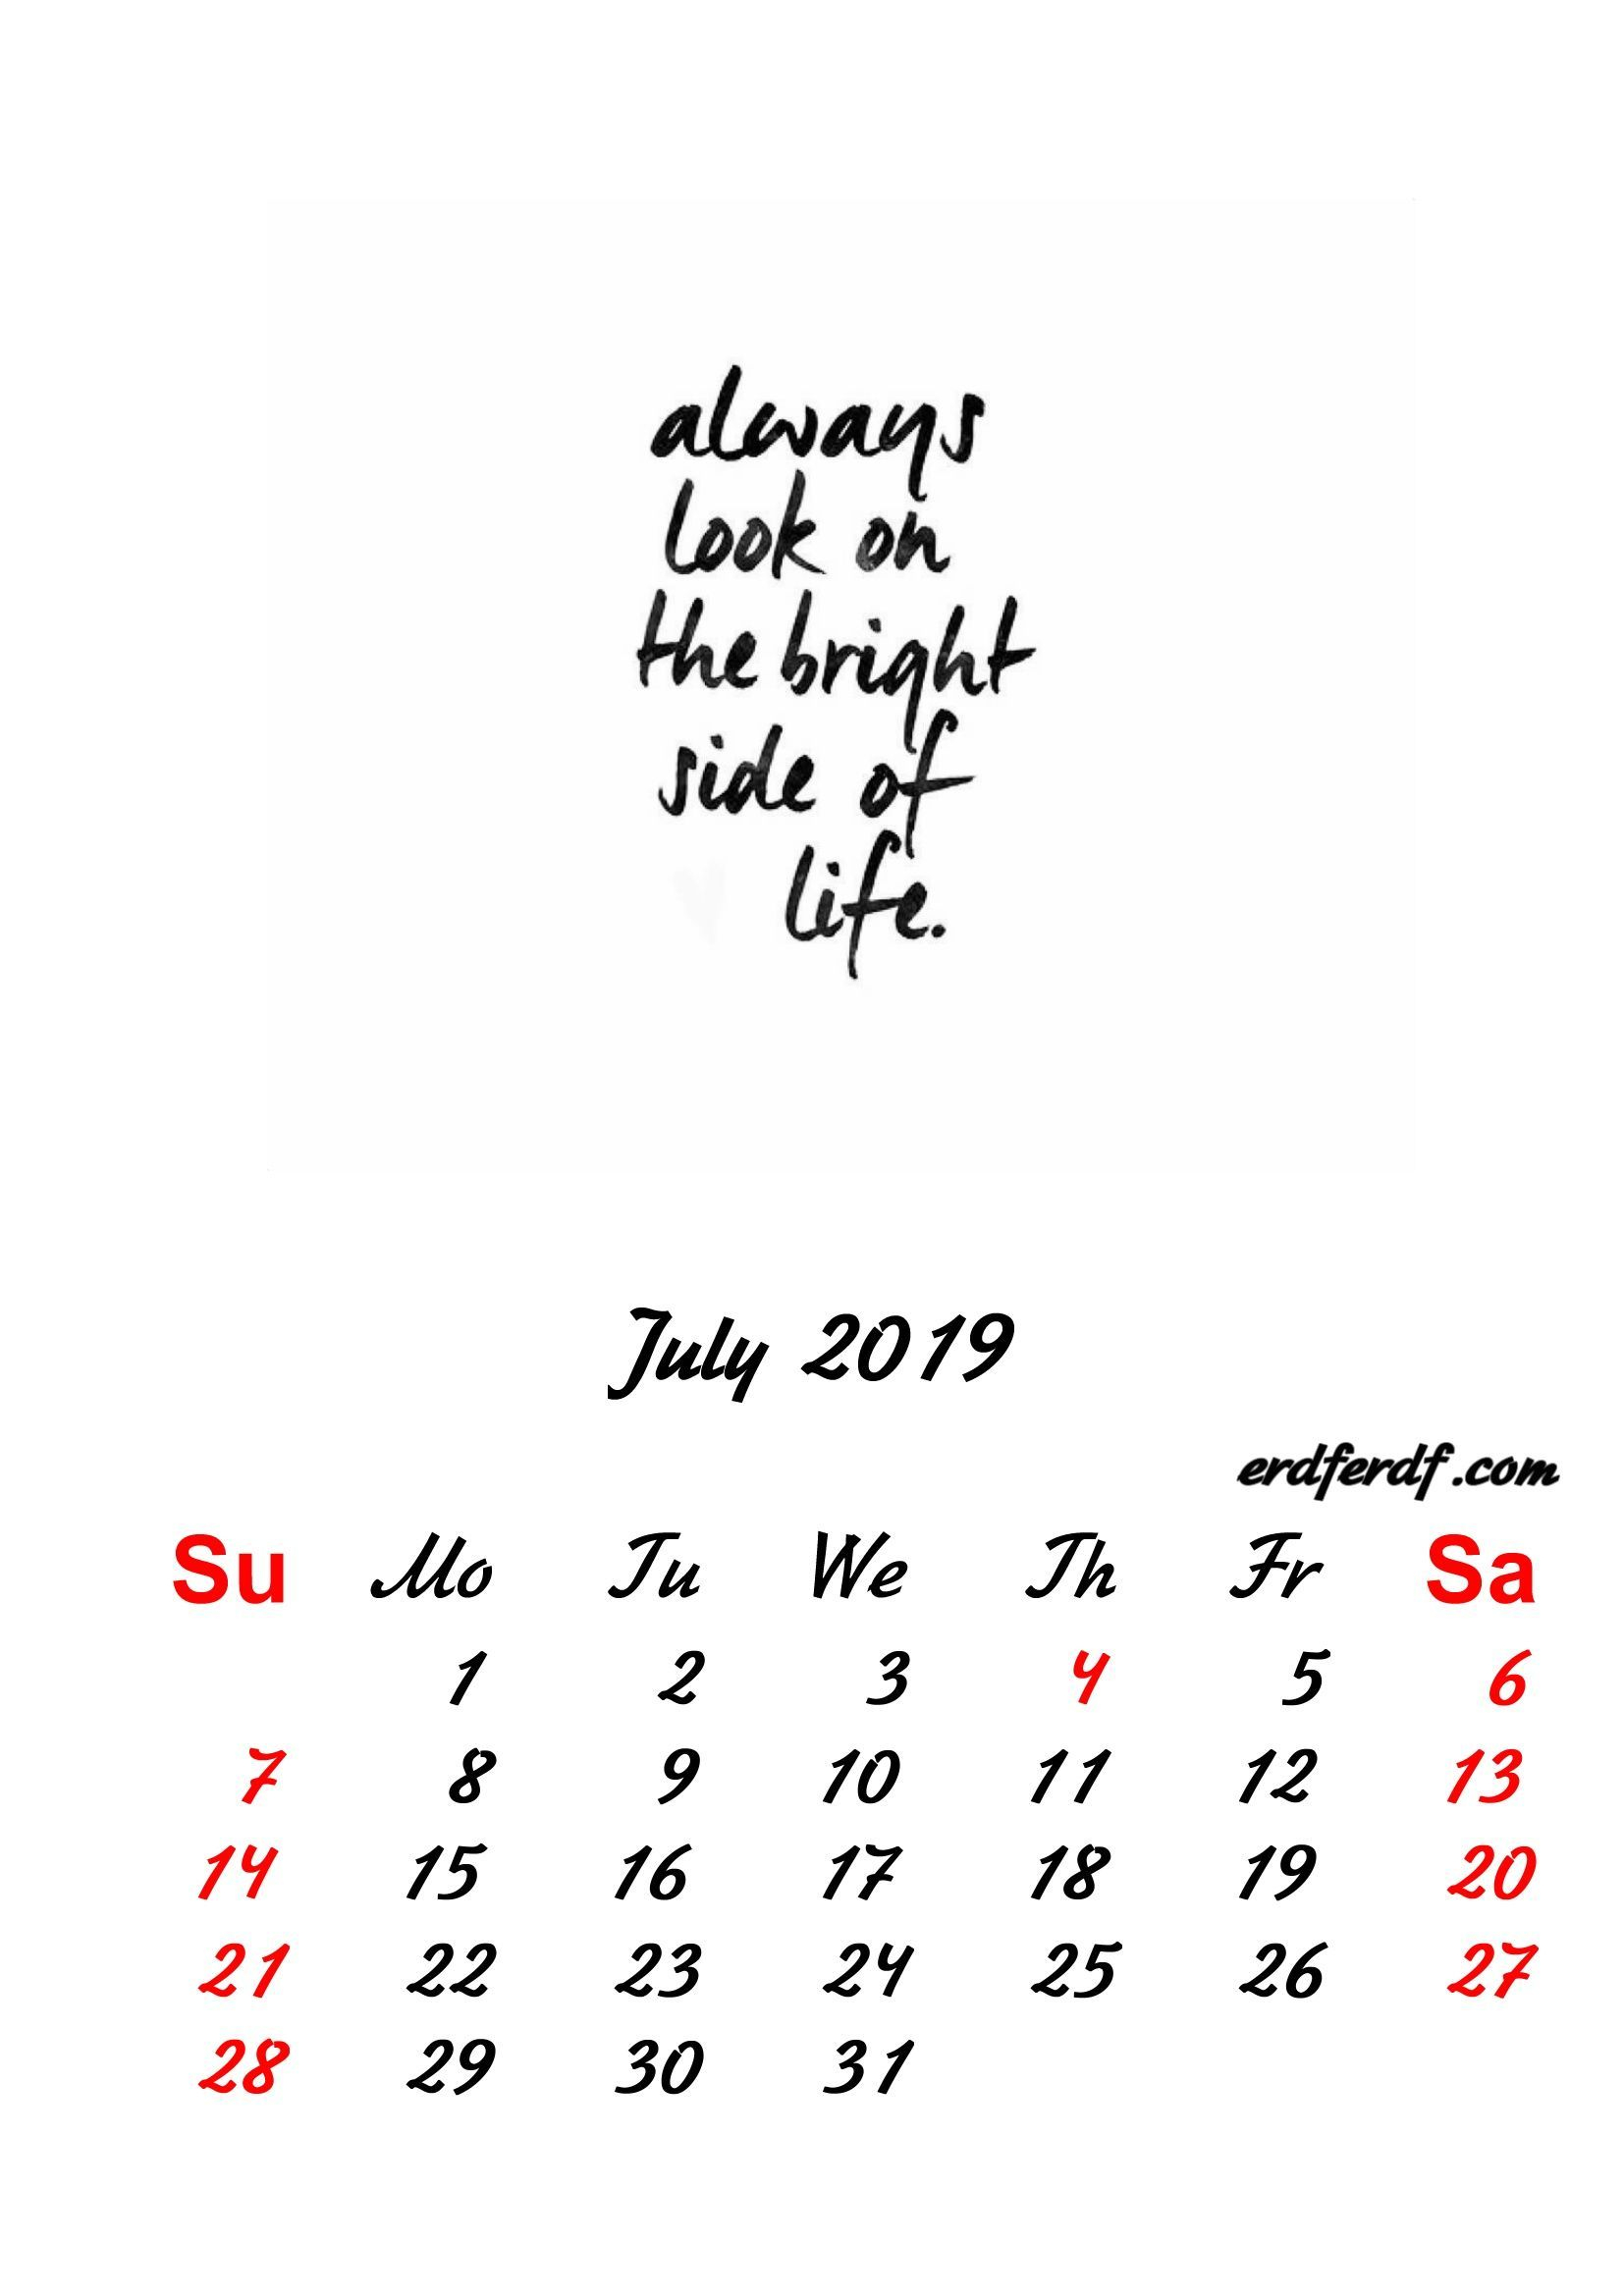 7 July 2019 Inspirational Quotes Pprintable Calendar